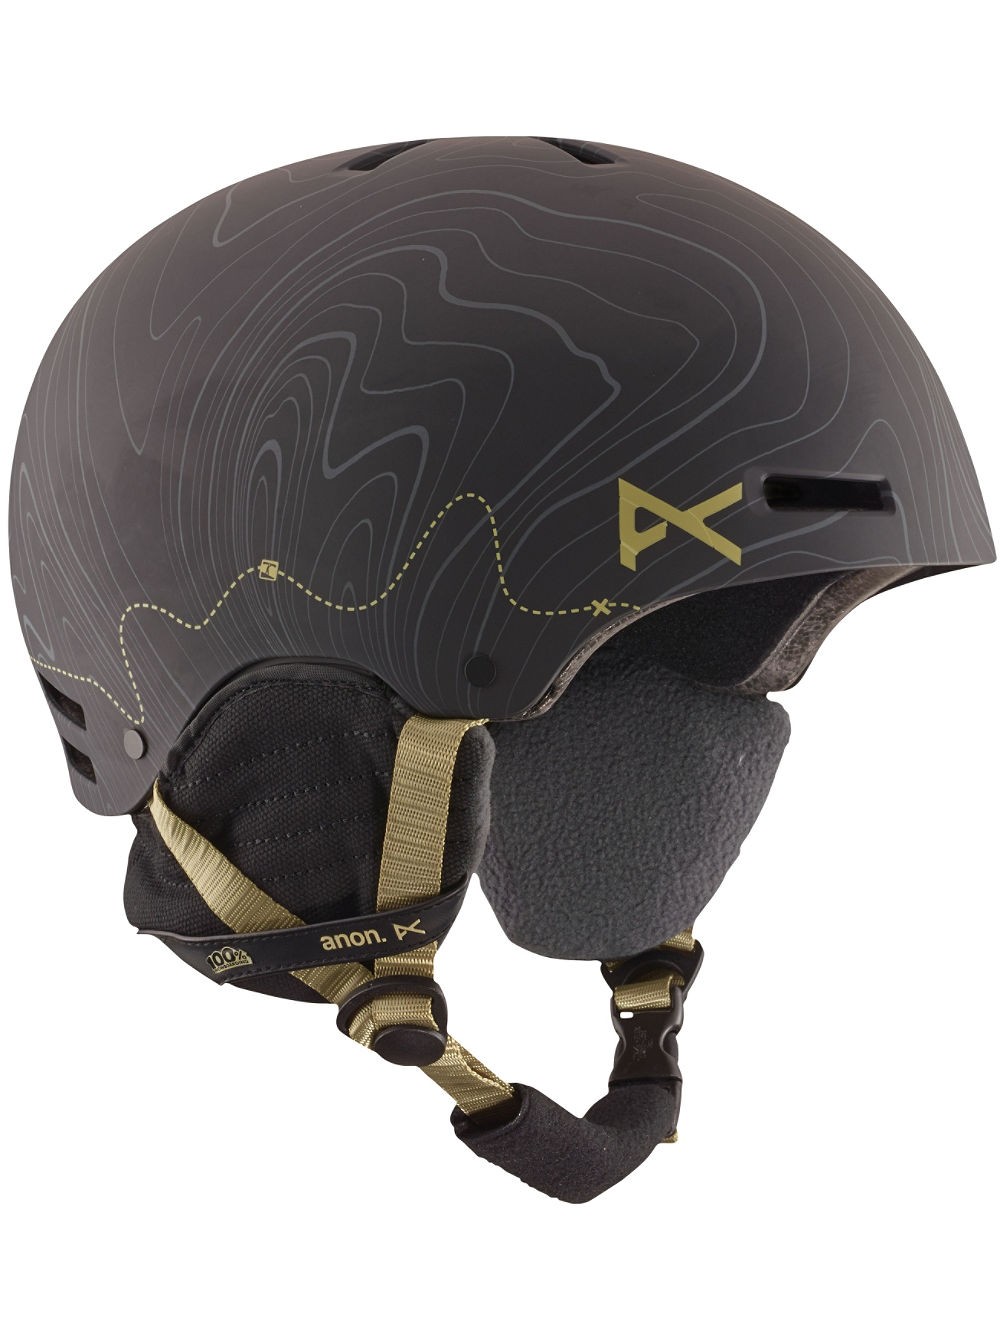 Raider Helm